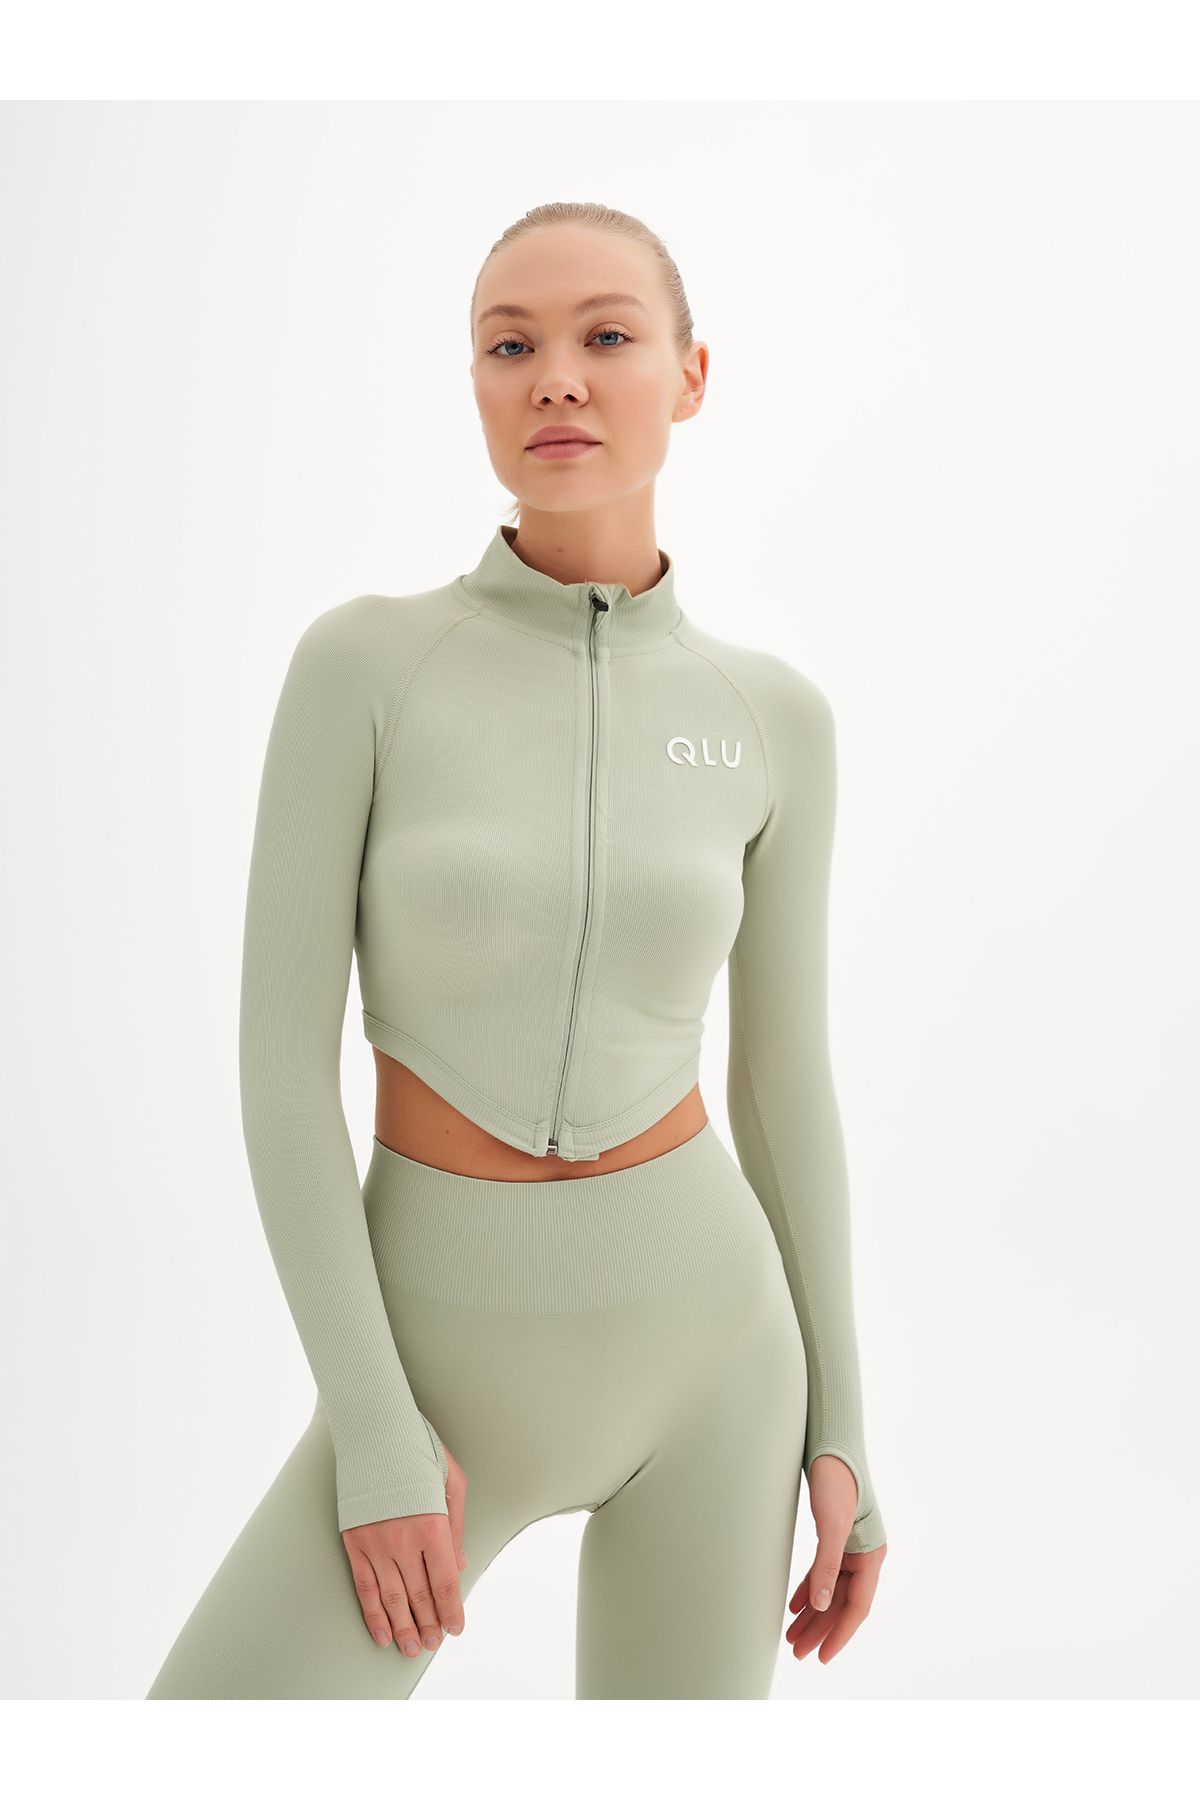 qlu Infinity Collection Kadın Yeşil Seamless/dikişsiz Fermuarlı Crop Top